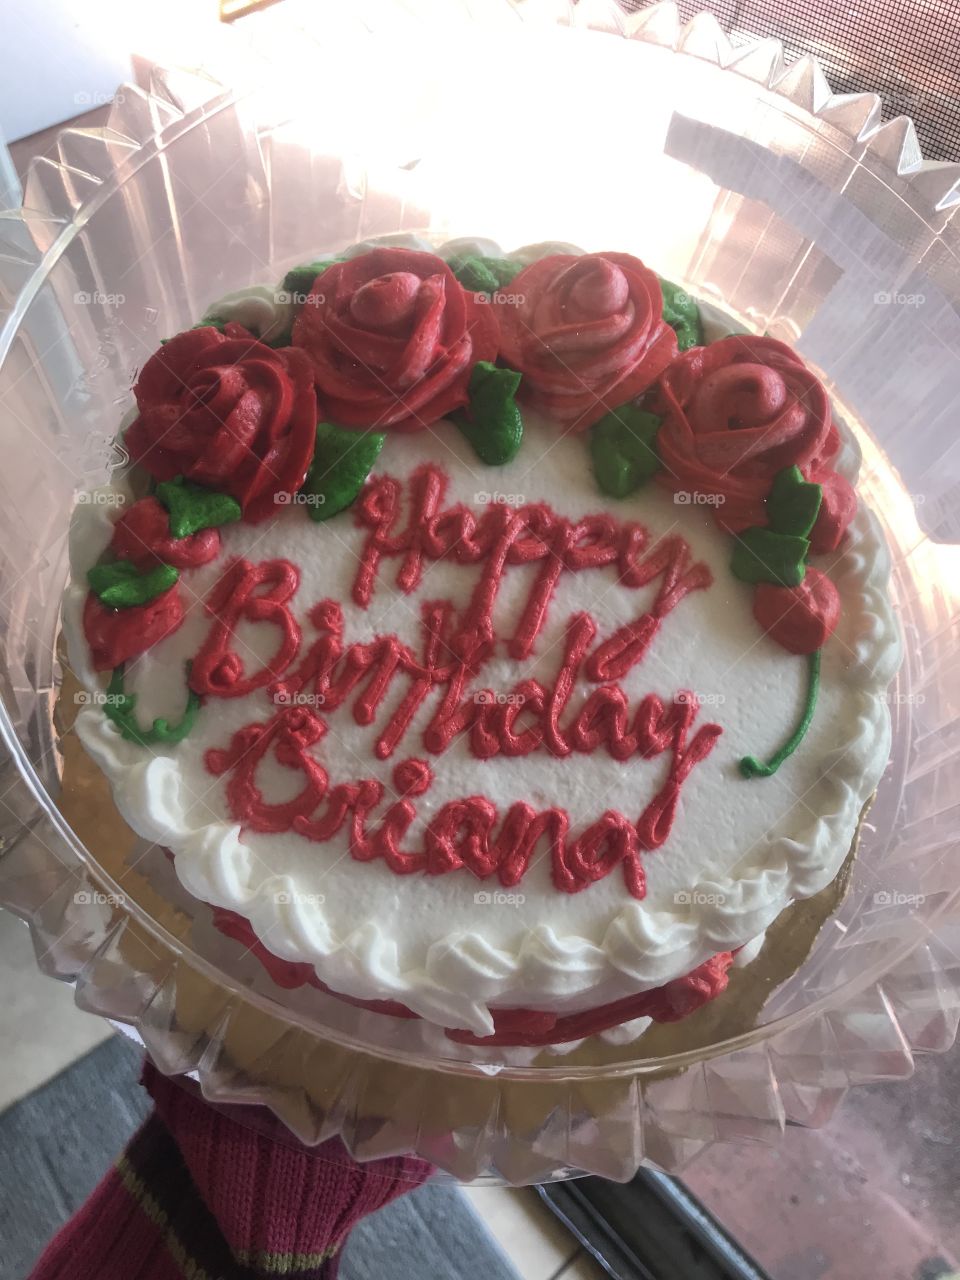 My Birthday Cake 🎂😊